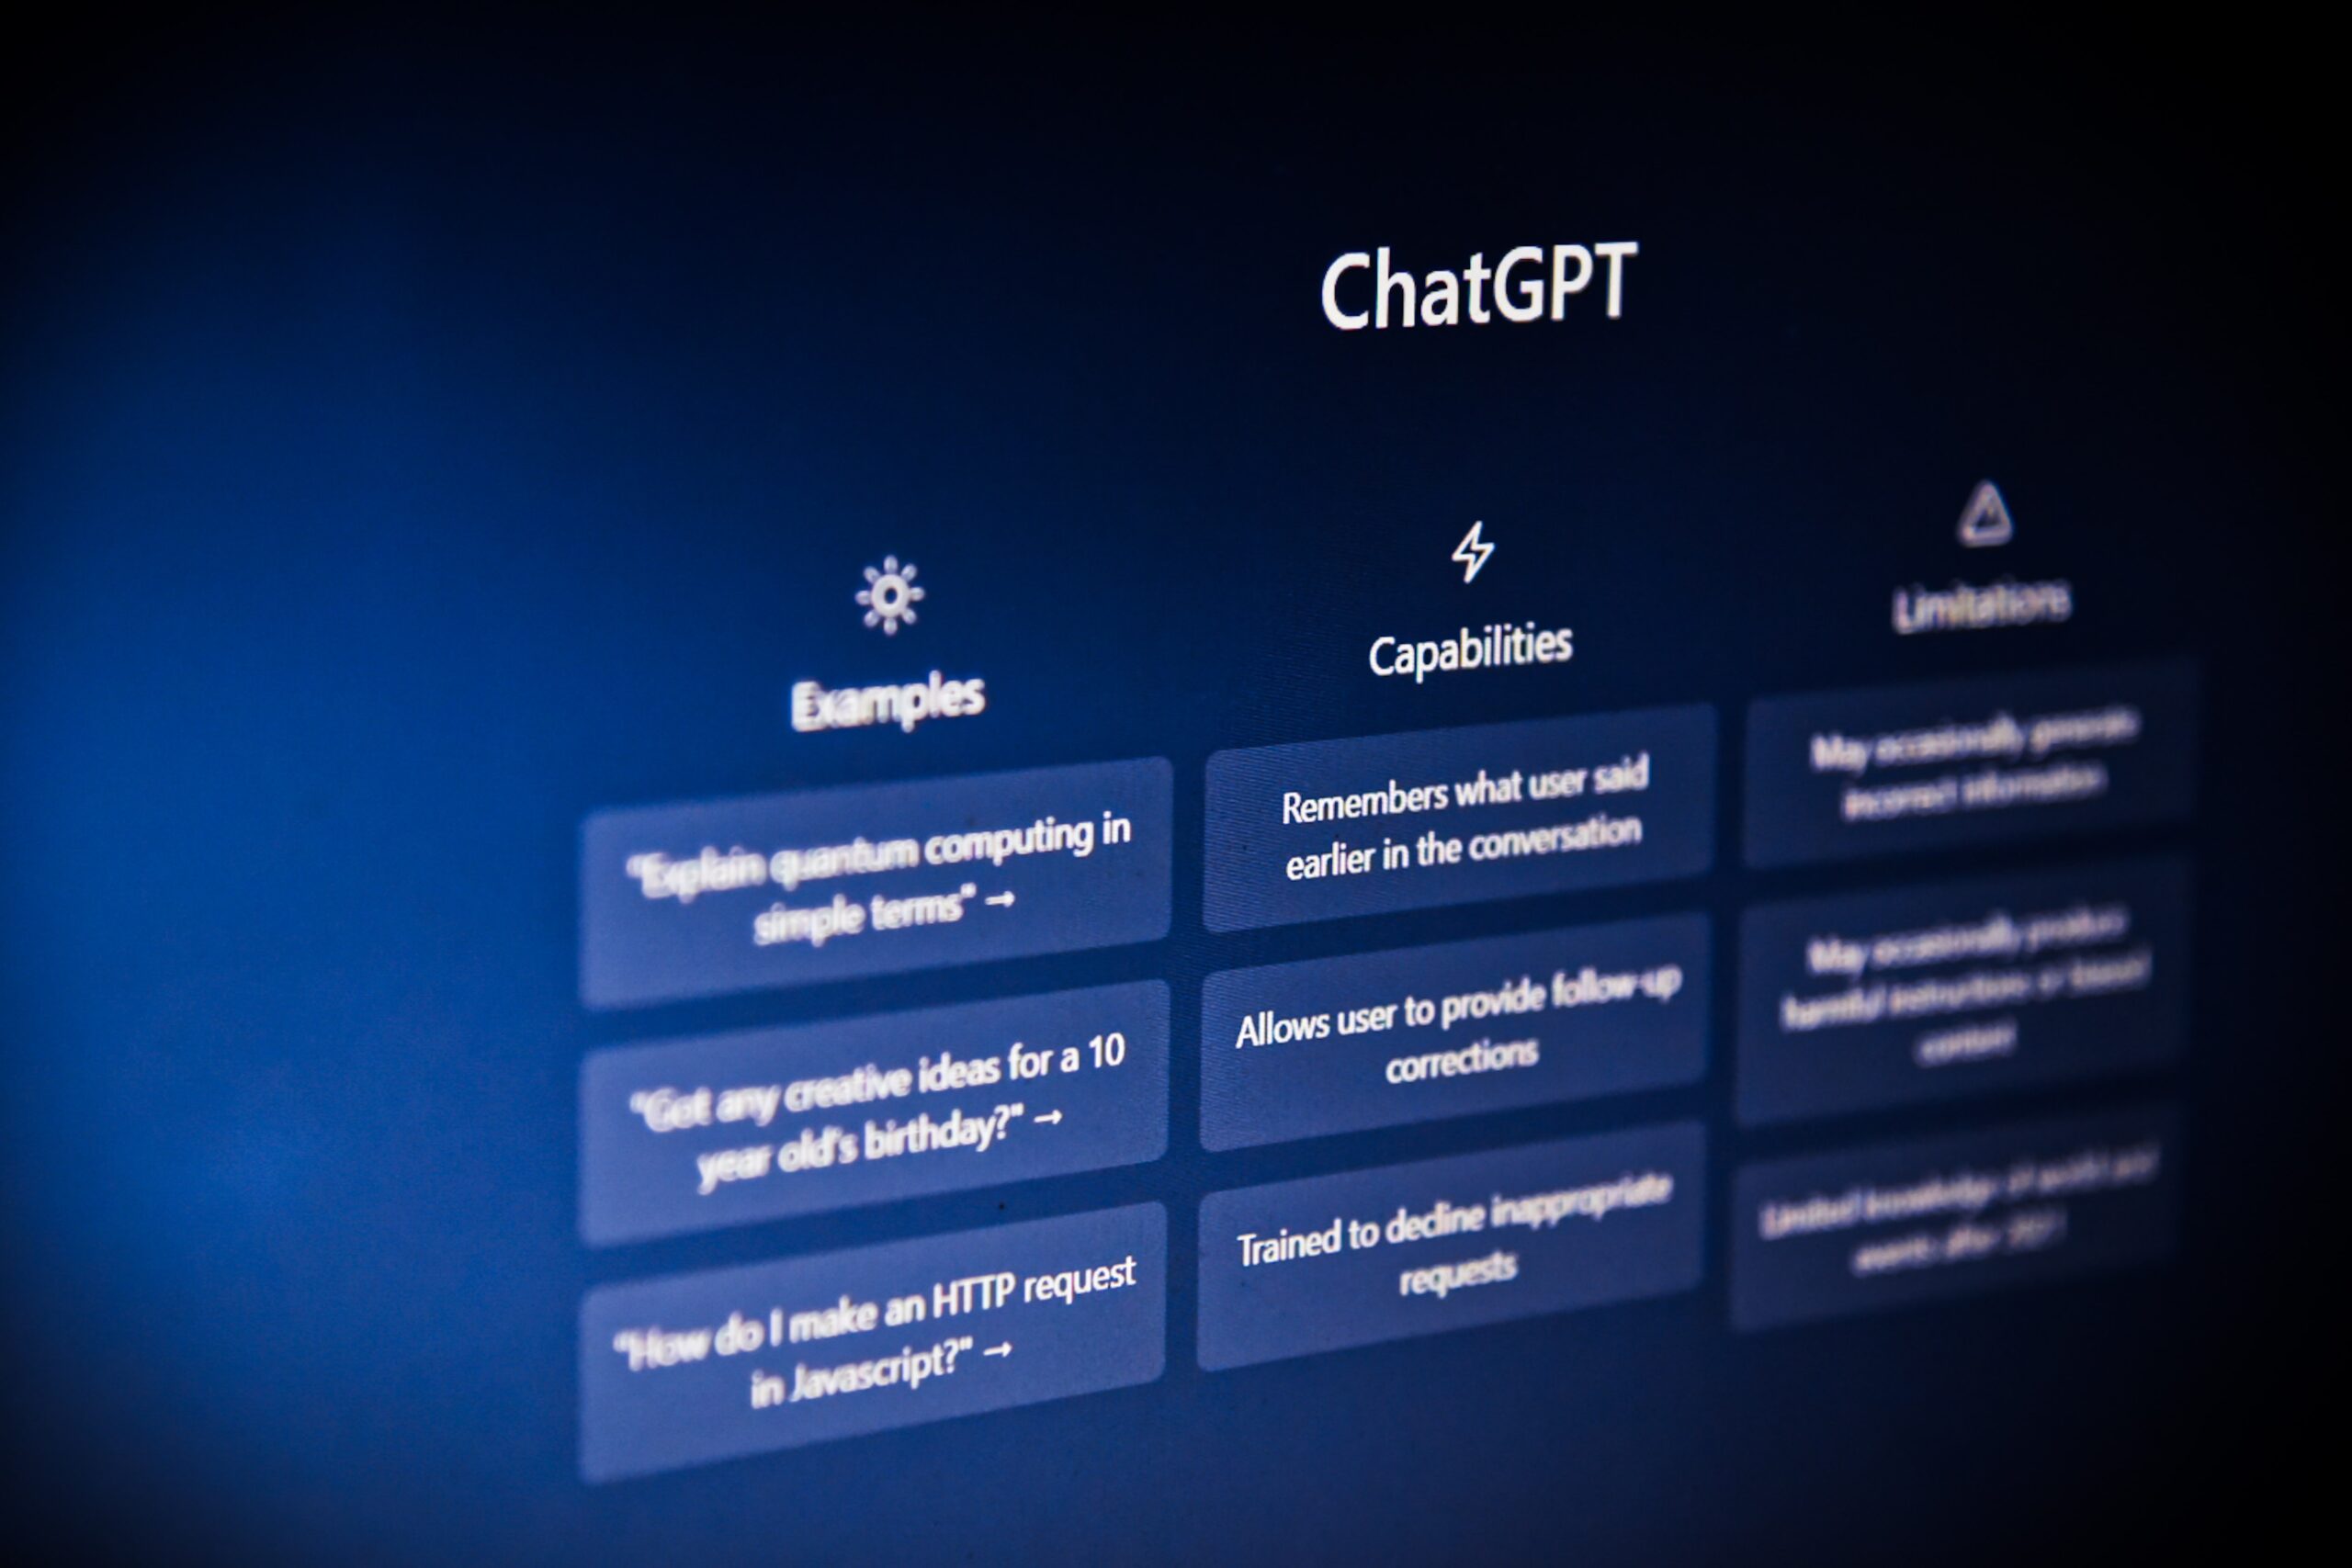 The Uses of Chatbots Like ChatGPT